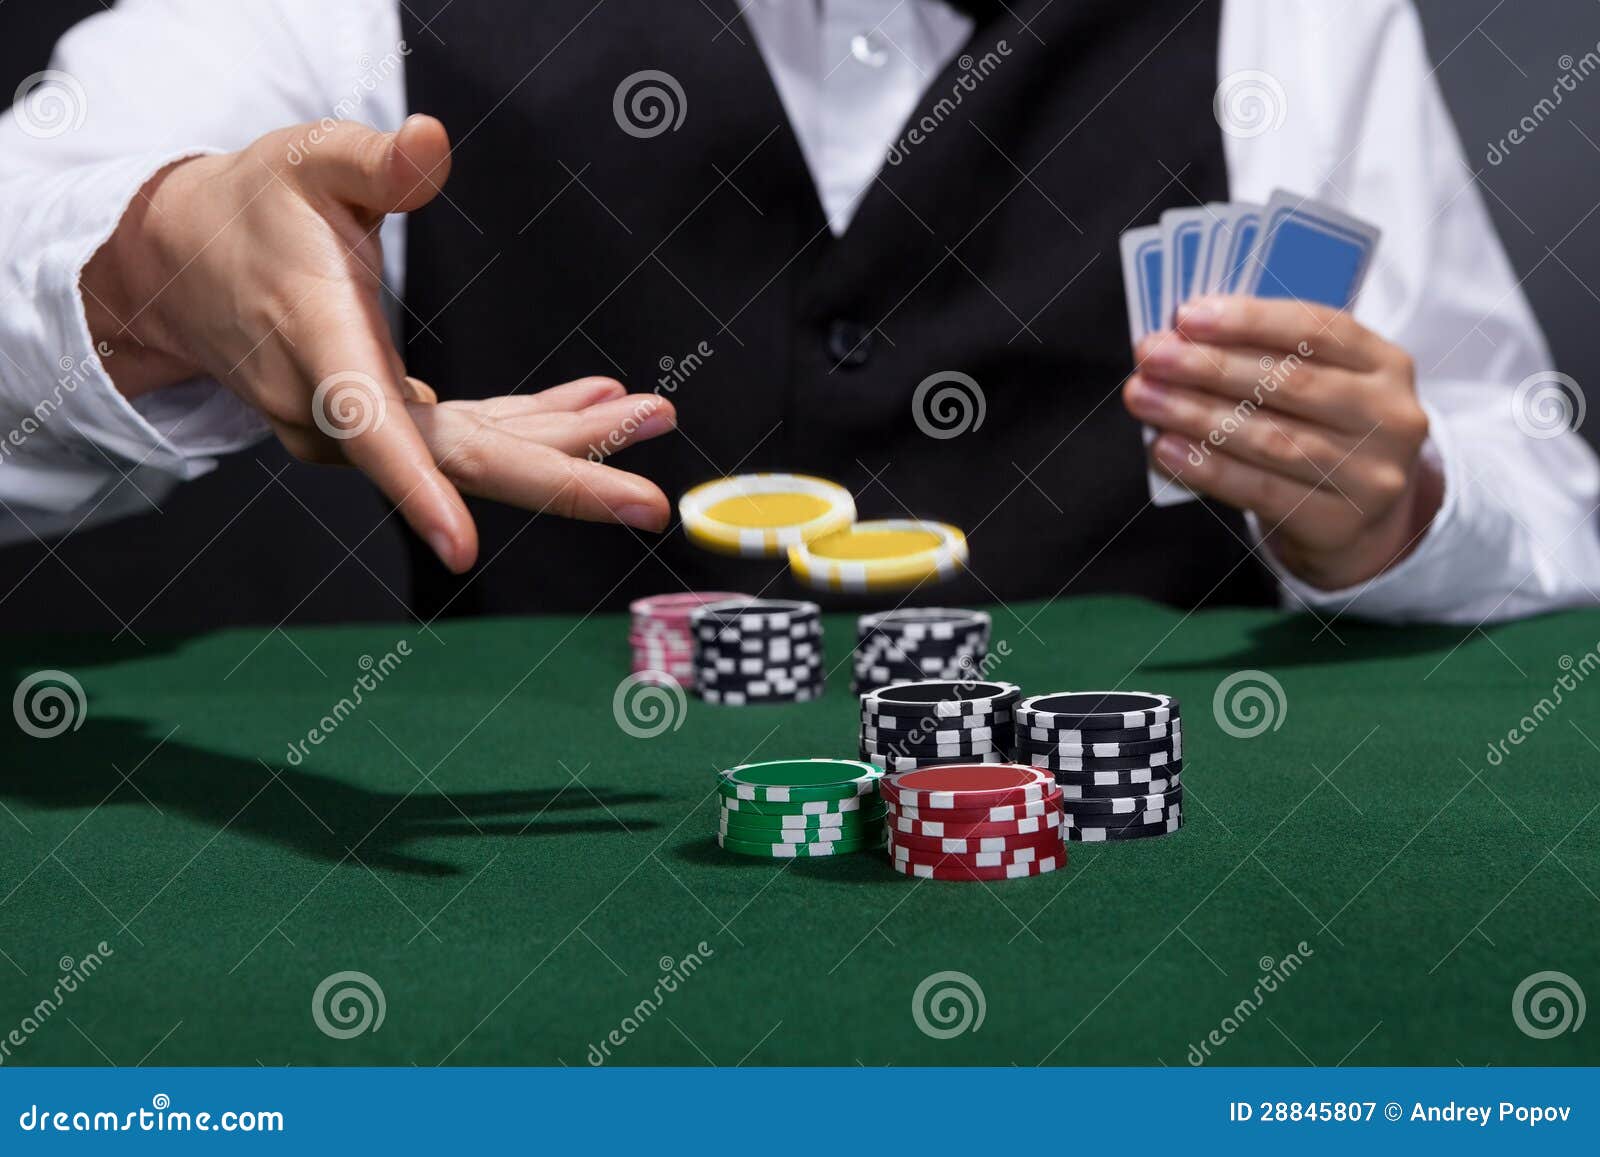 poker-player-increasing-his-stakes-28845807.jpg